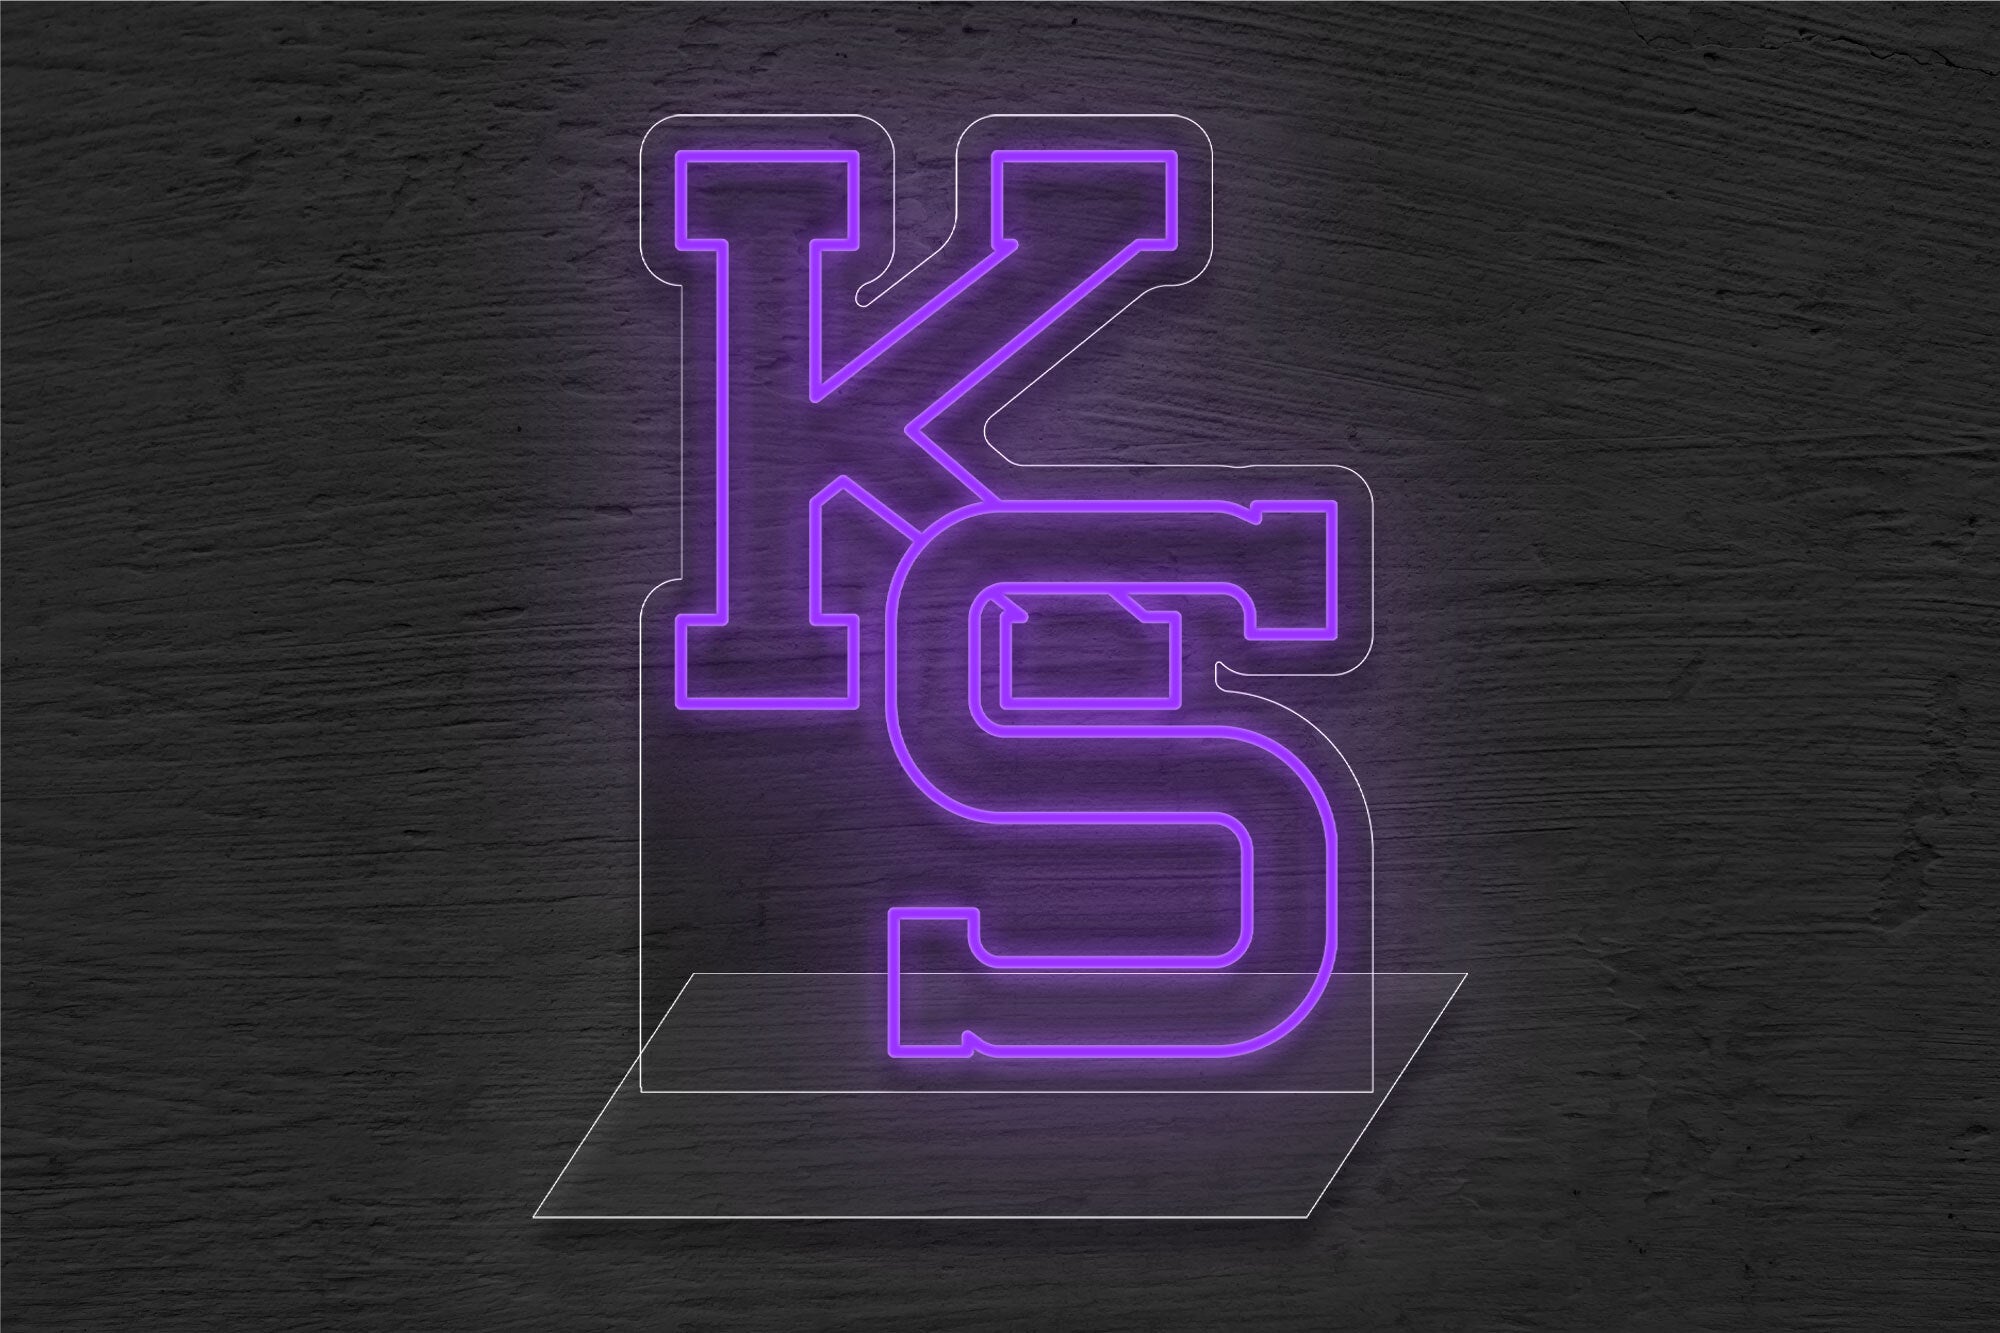 KS Vector Logo - Download Free SVG Icon | Worldvectorlogo